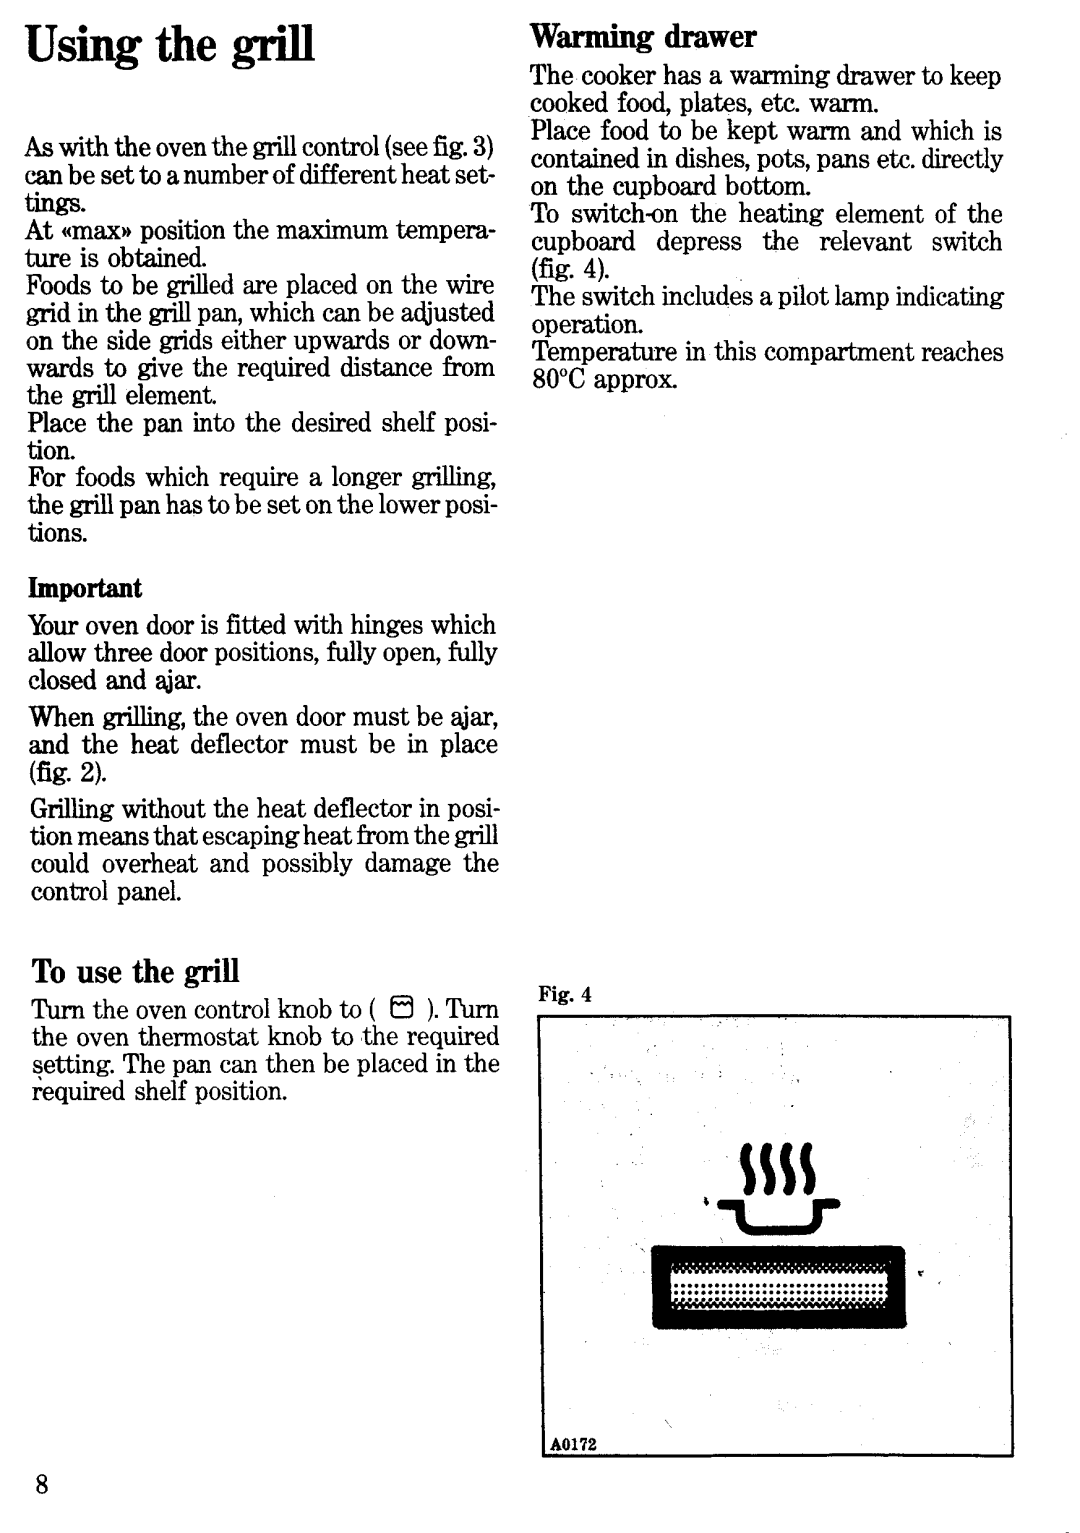 Zanussi VC40 manual 